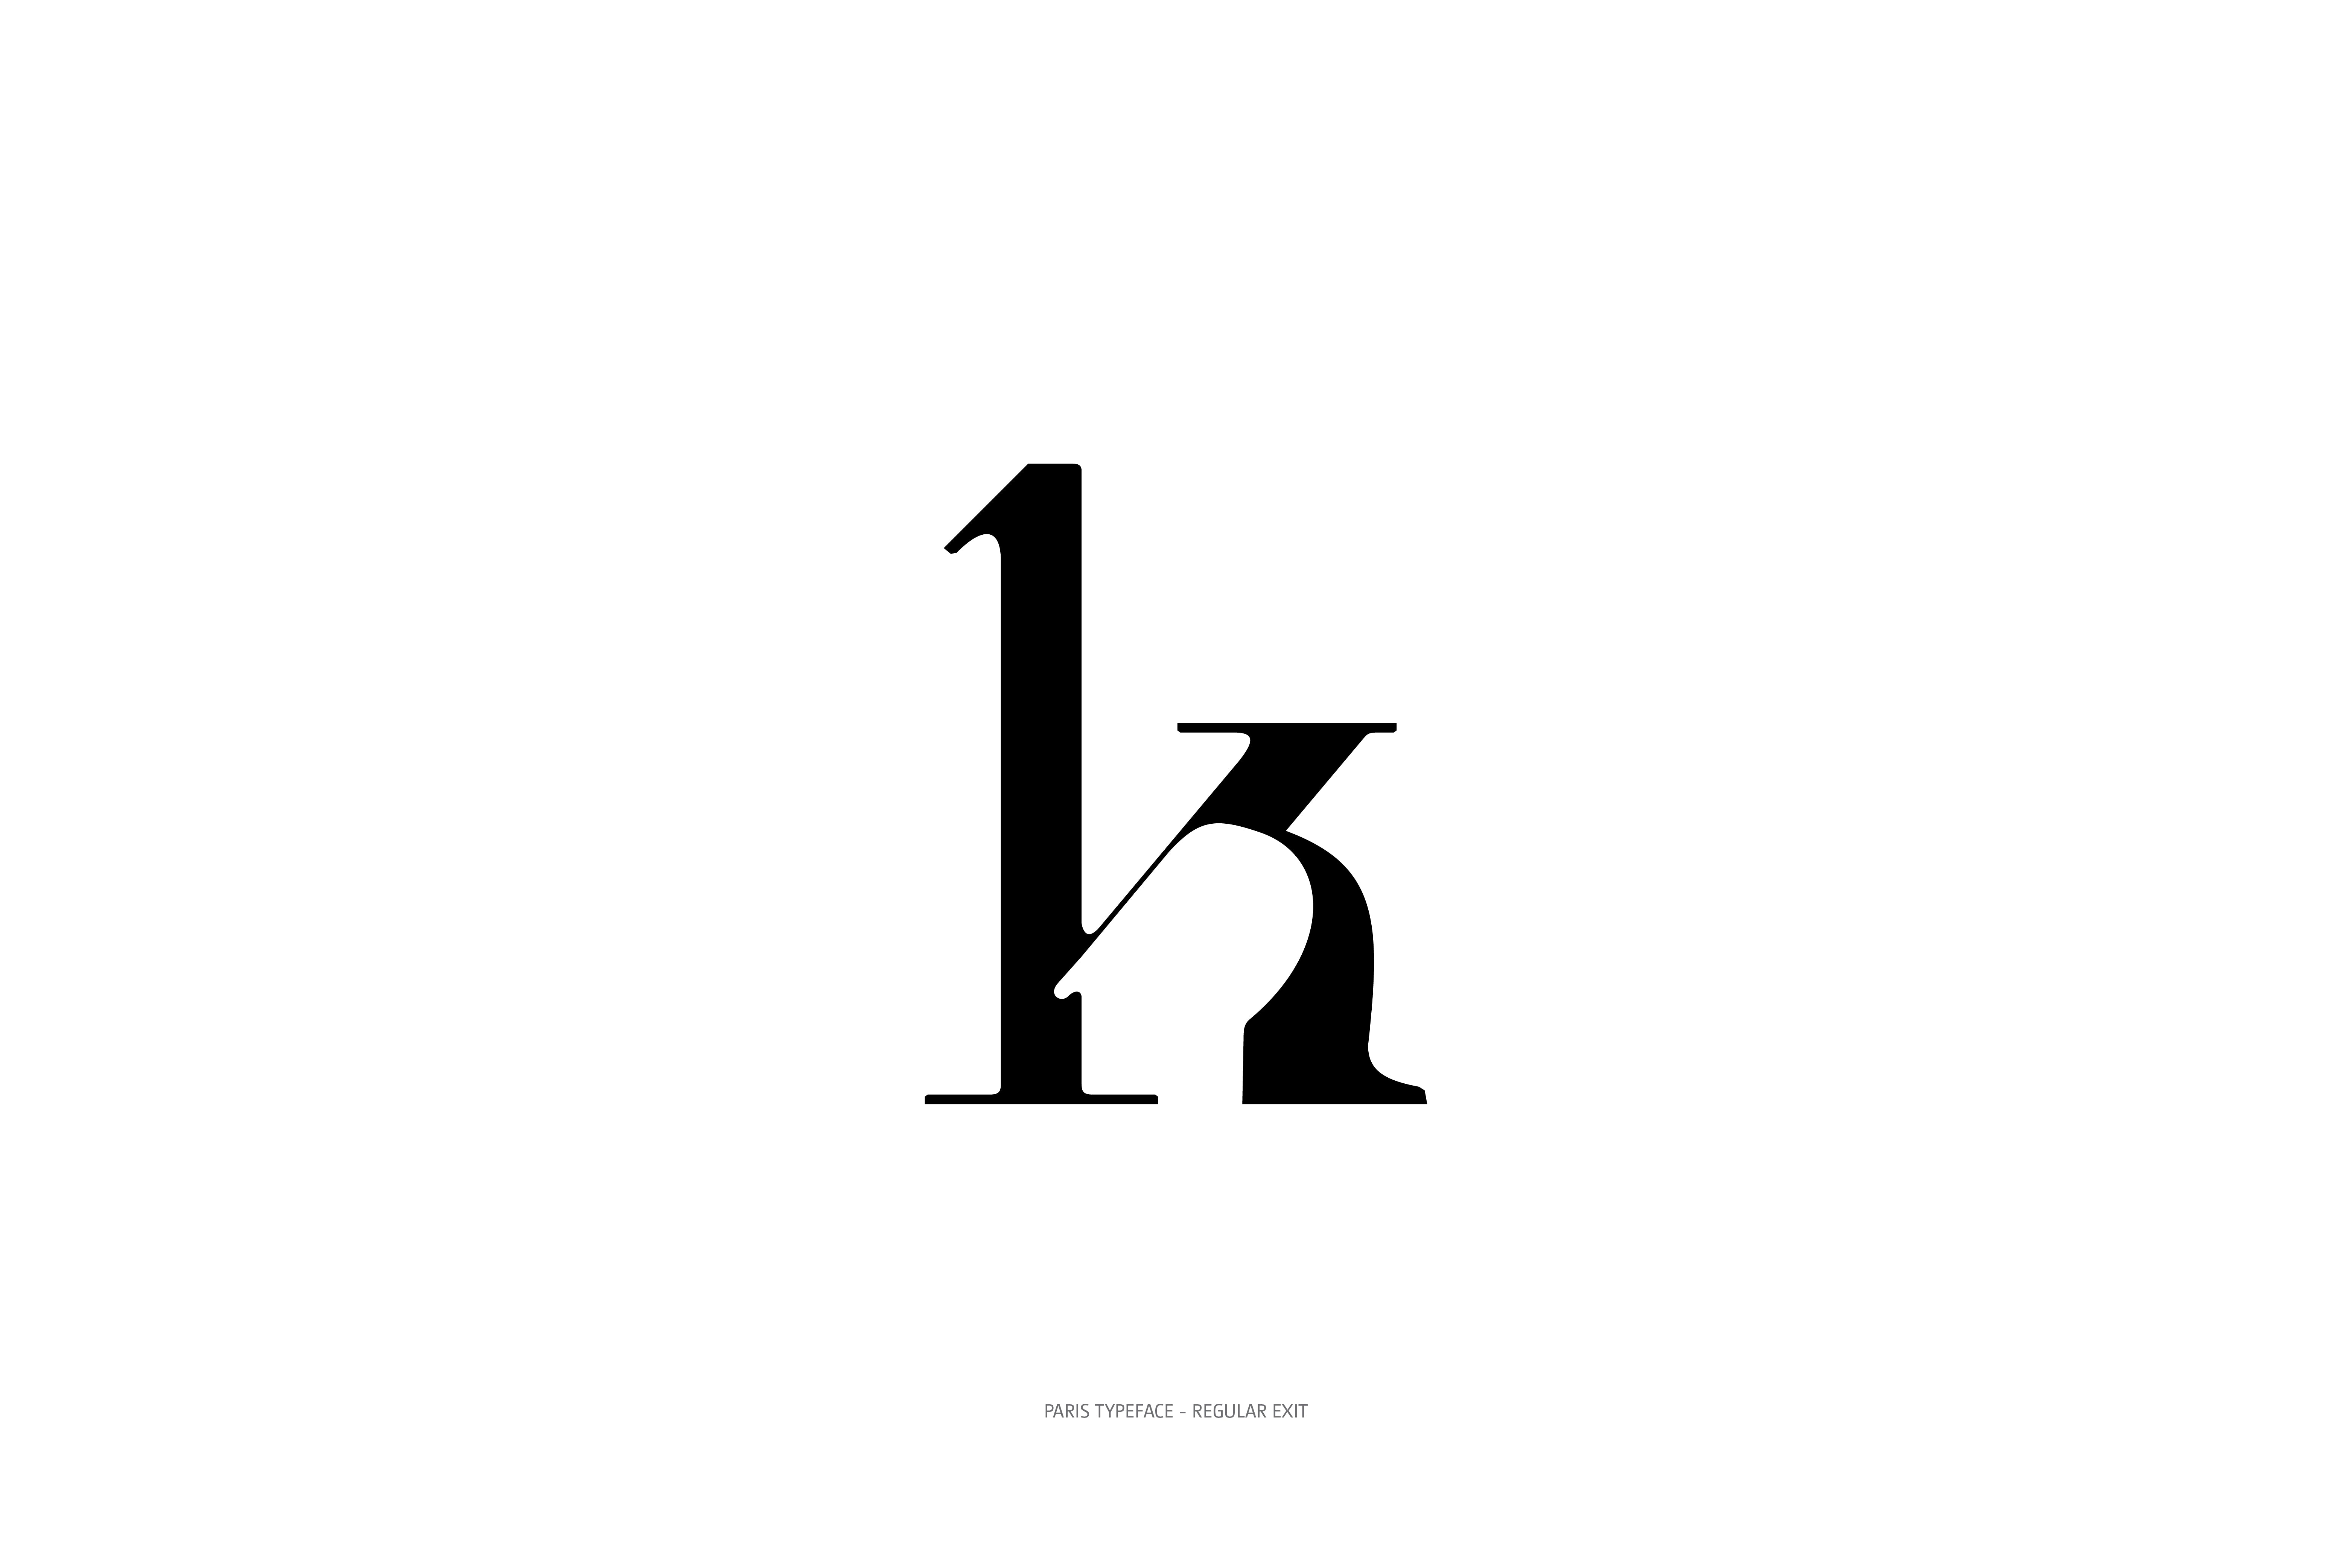 Paris Typeface Regular Exit k